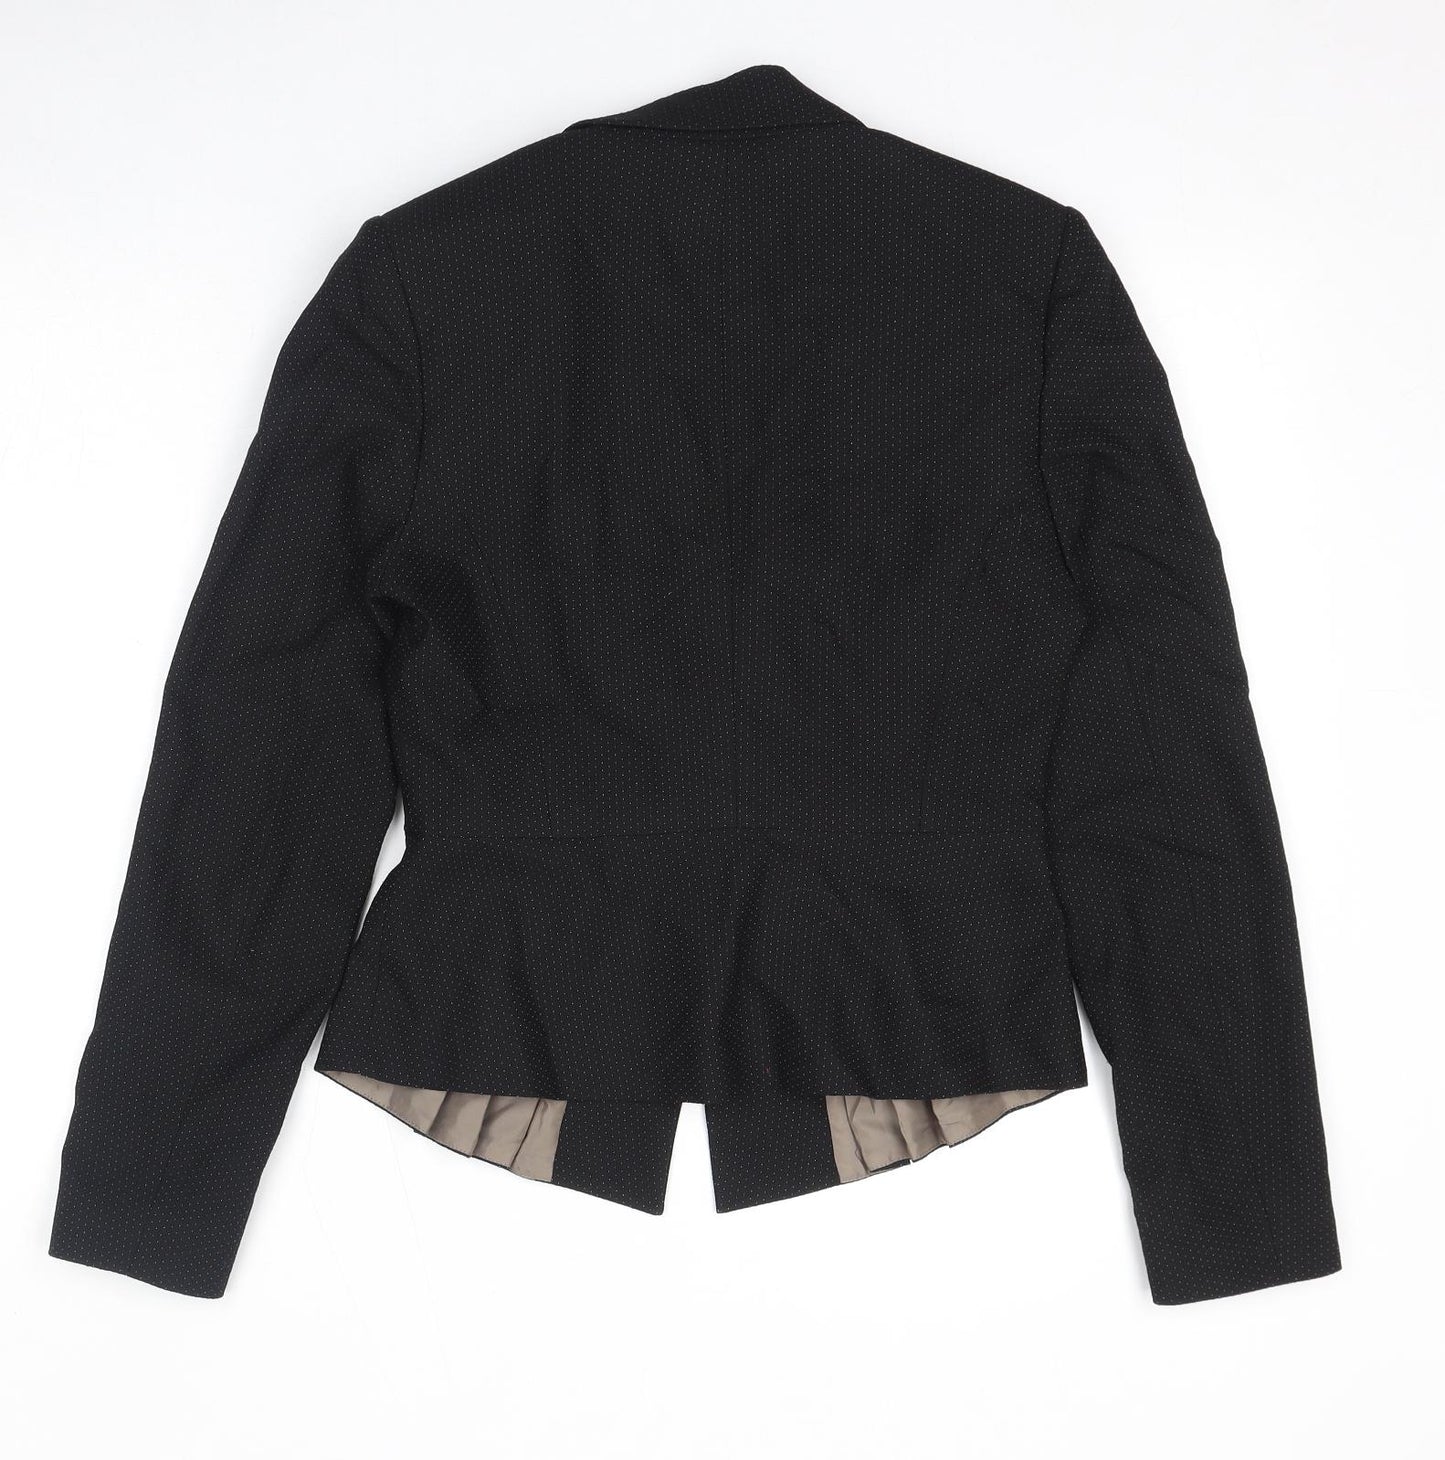 Edina Ronay Womens Black Polka Dot Jacket Blazer Size S Button - Pleated Detail